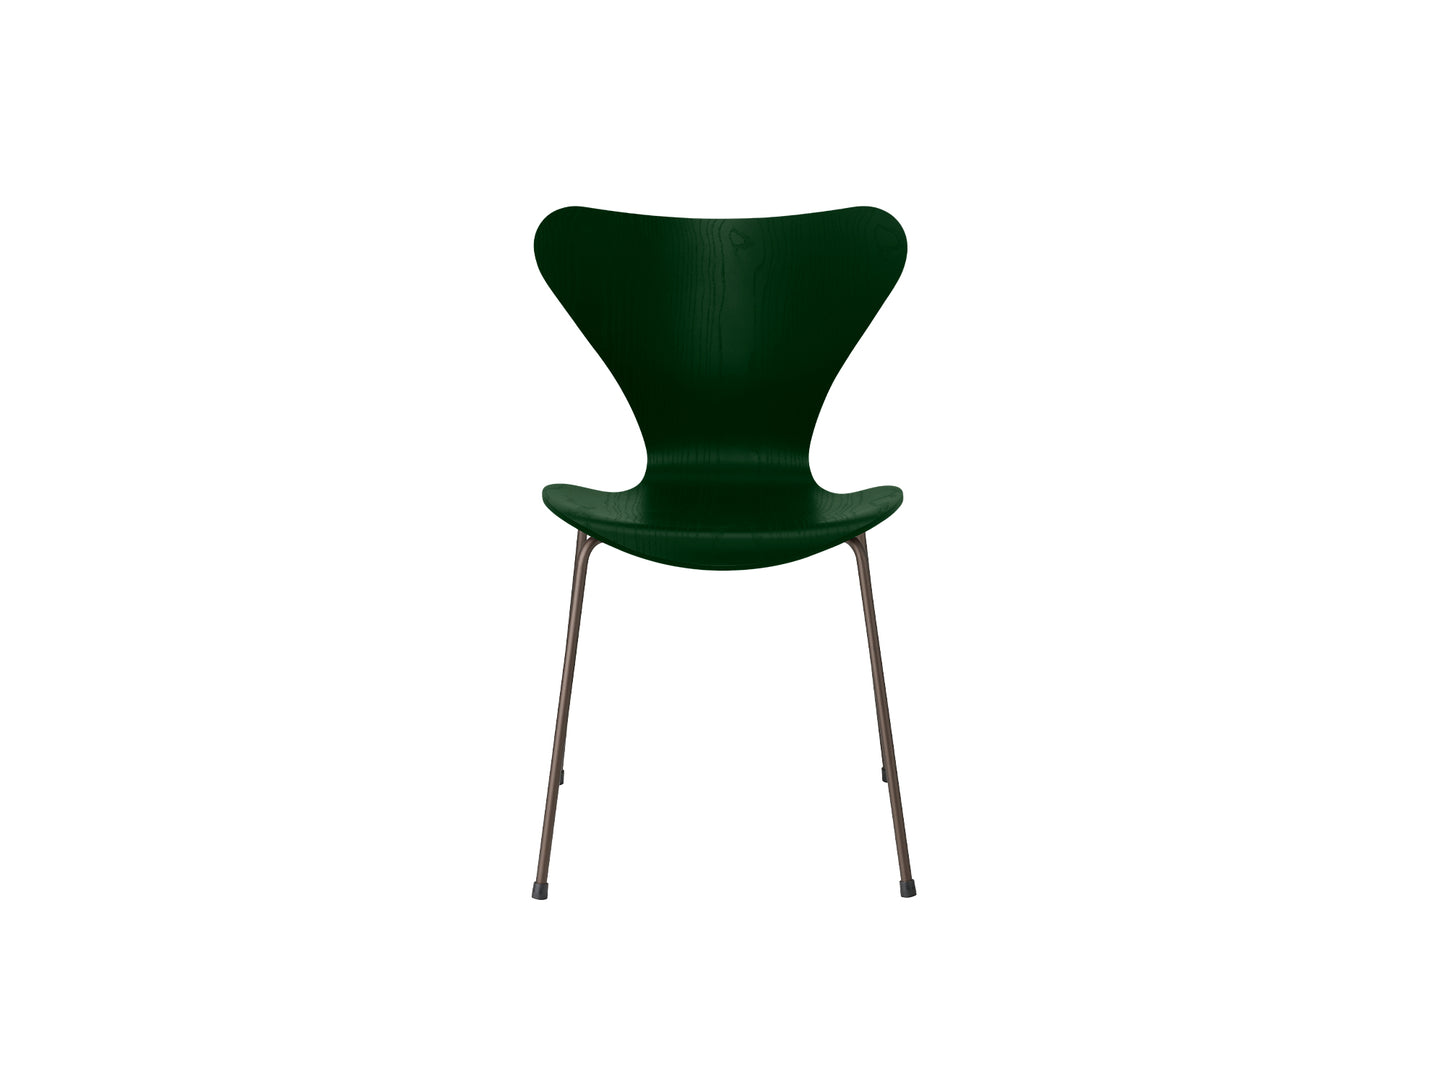 Series 7™ 3107 Dining Chair by Fritz Hansen - Evergreen Coloured Ash Veneer Shell / Brown Bronze Steel